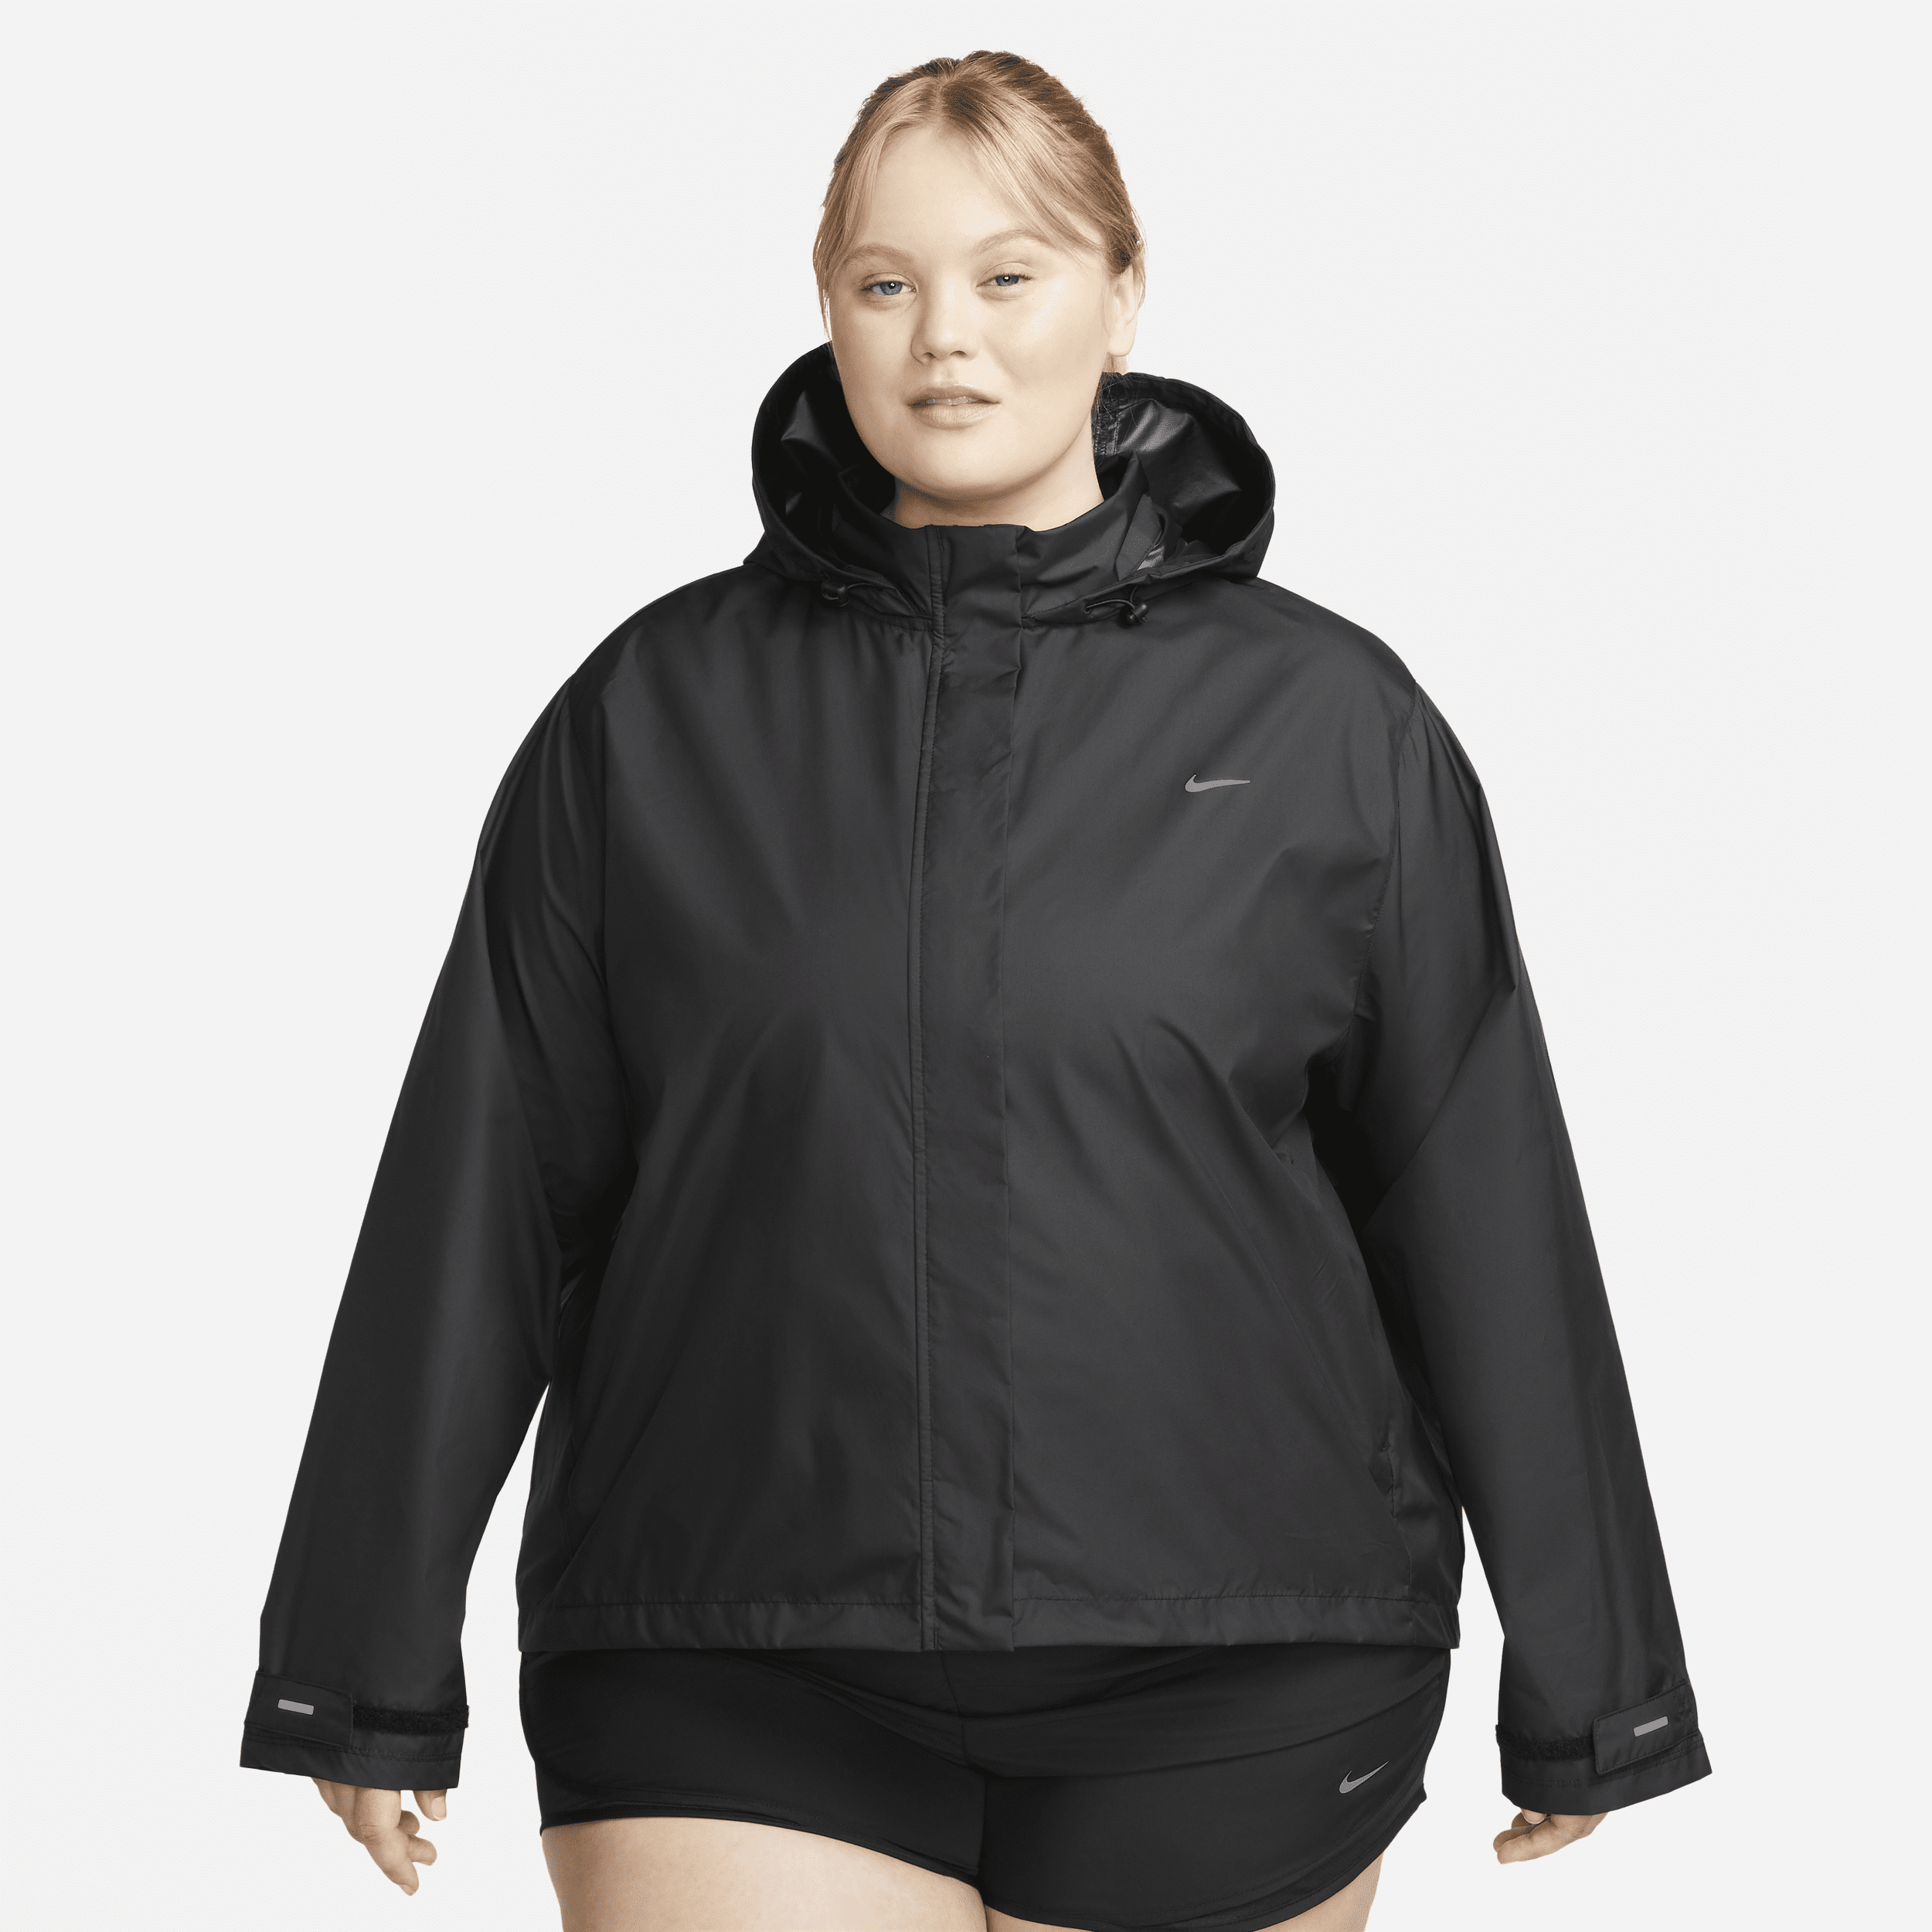 Giacca da running Nike Fast Repel – Donna - Nero